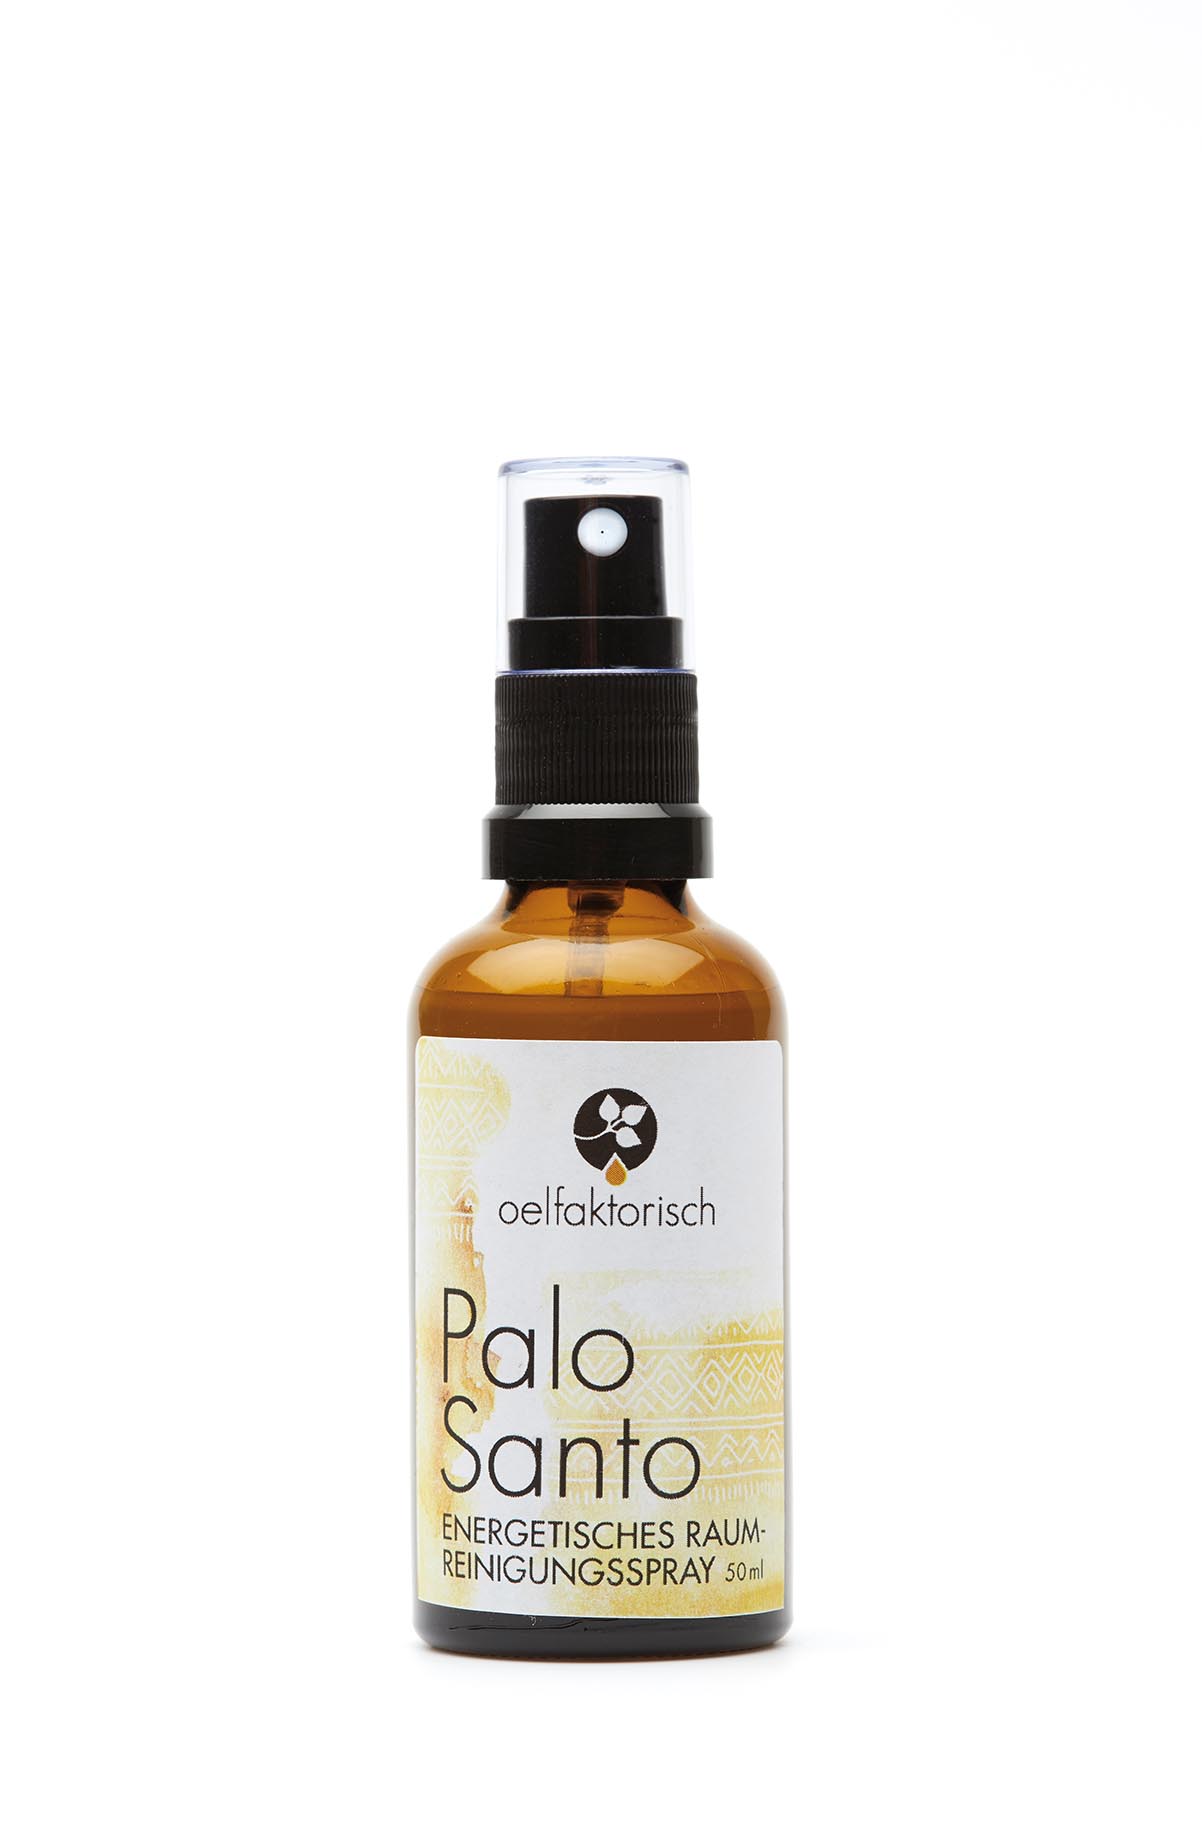 Palo Santo – Das heilige Holz